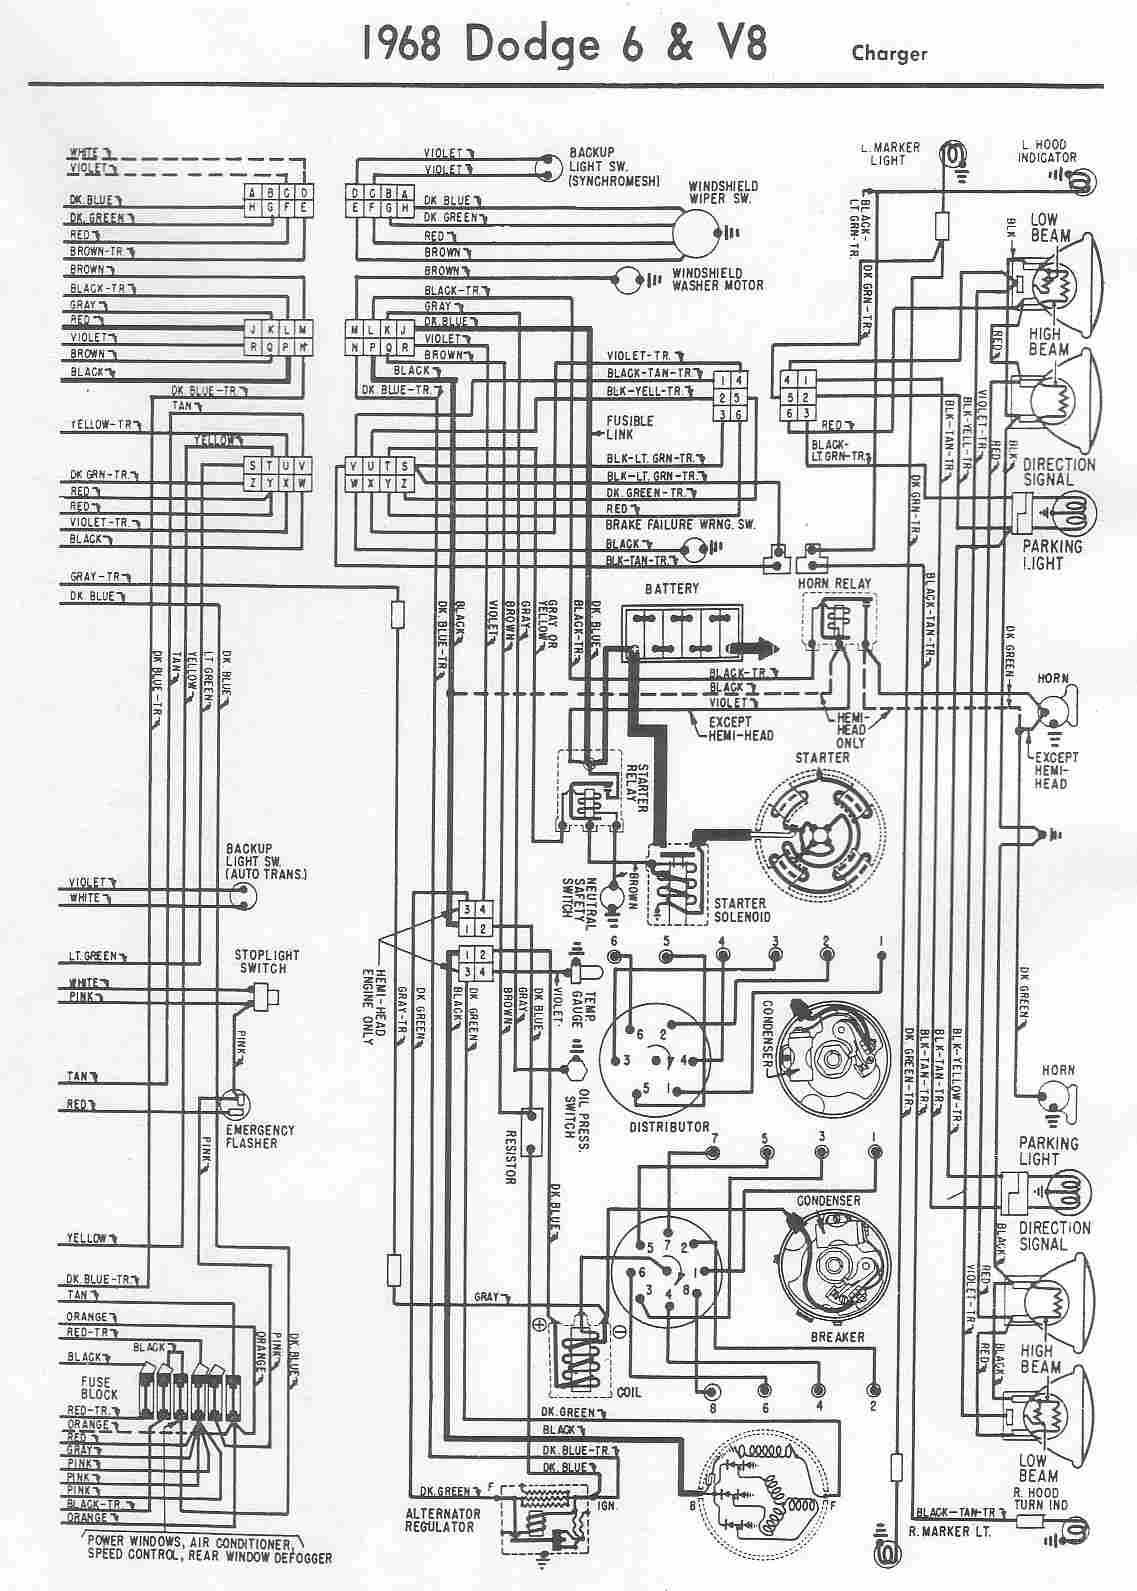 1972 Dodge Dart Wiring Diagram from www.automotive-manuals.net